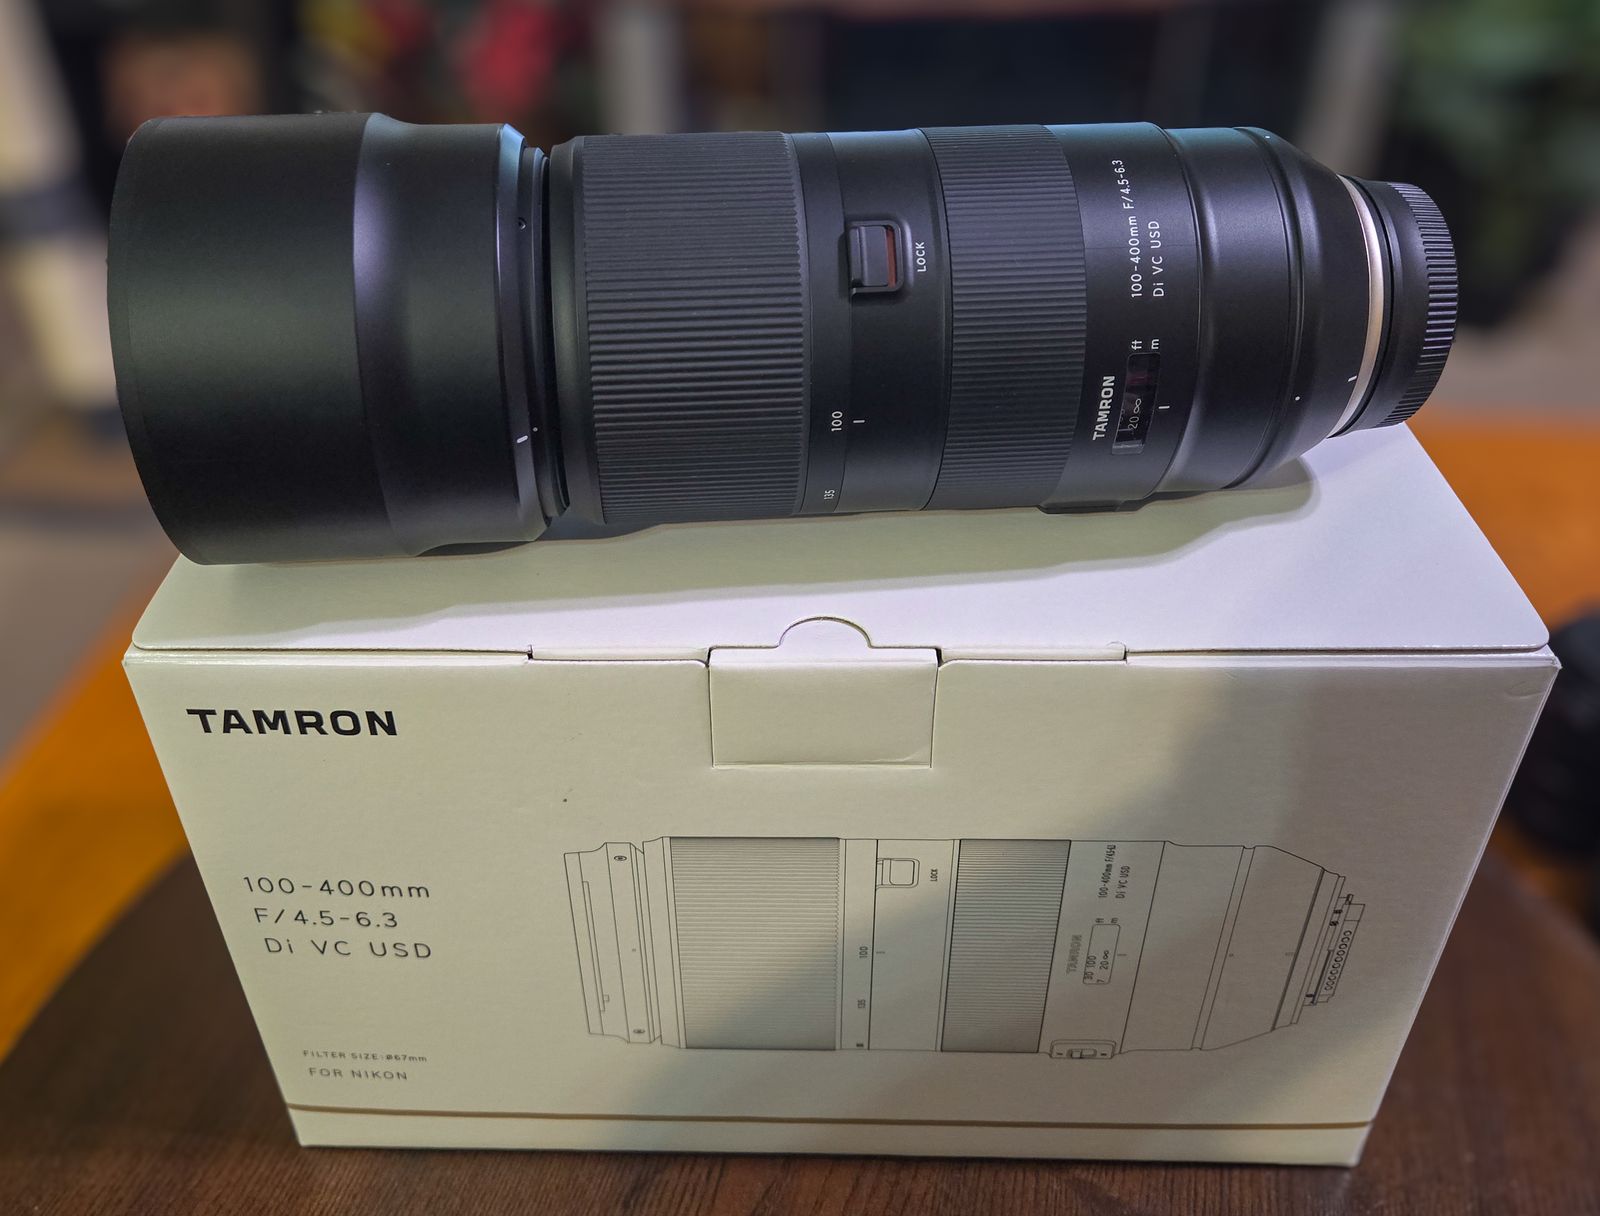 Tamron 100-400mm f/4.5-6.3 Di VC USD Lens for Nikon – Excellent Condition